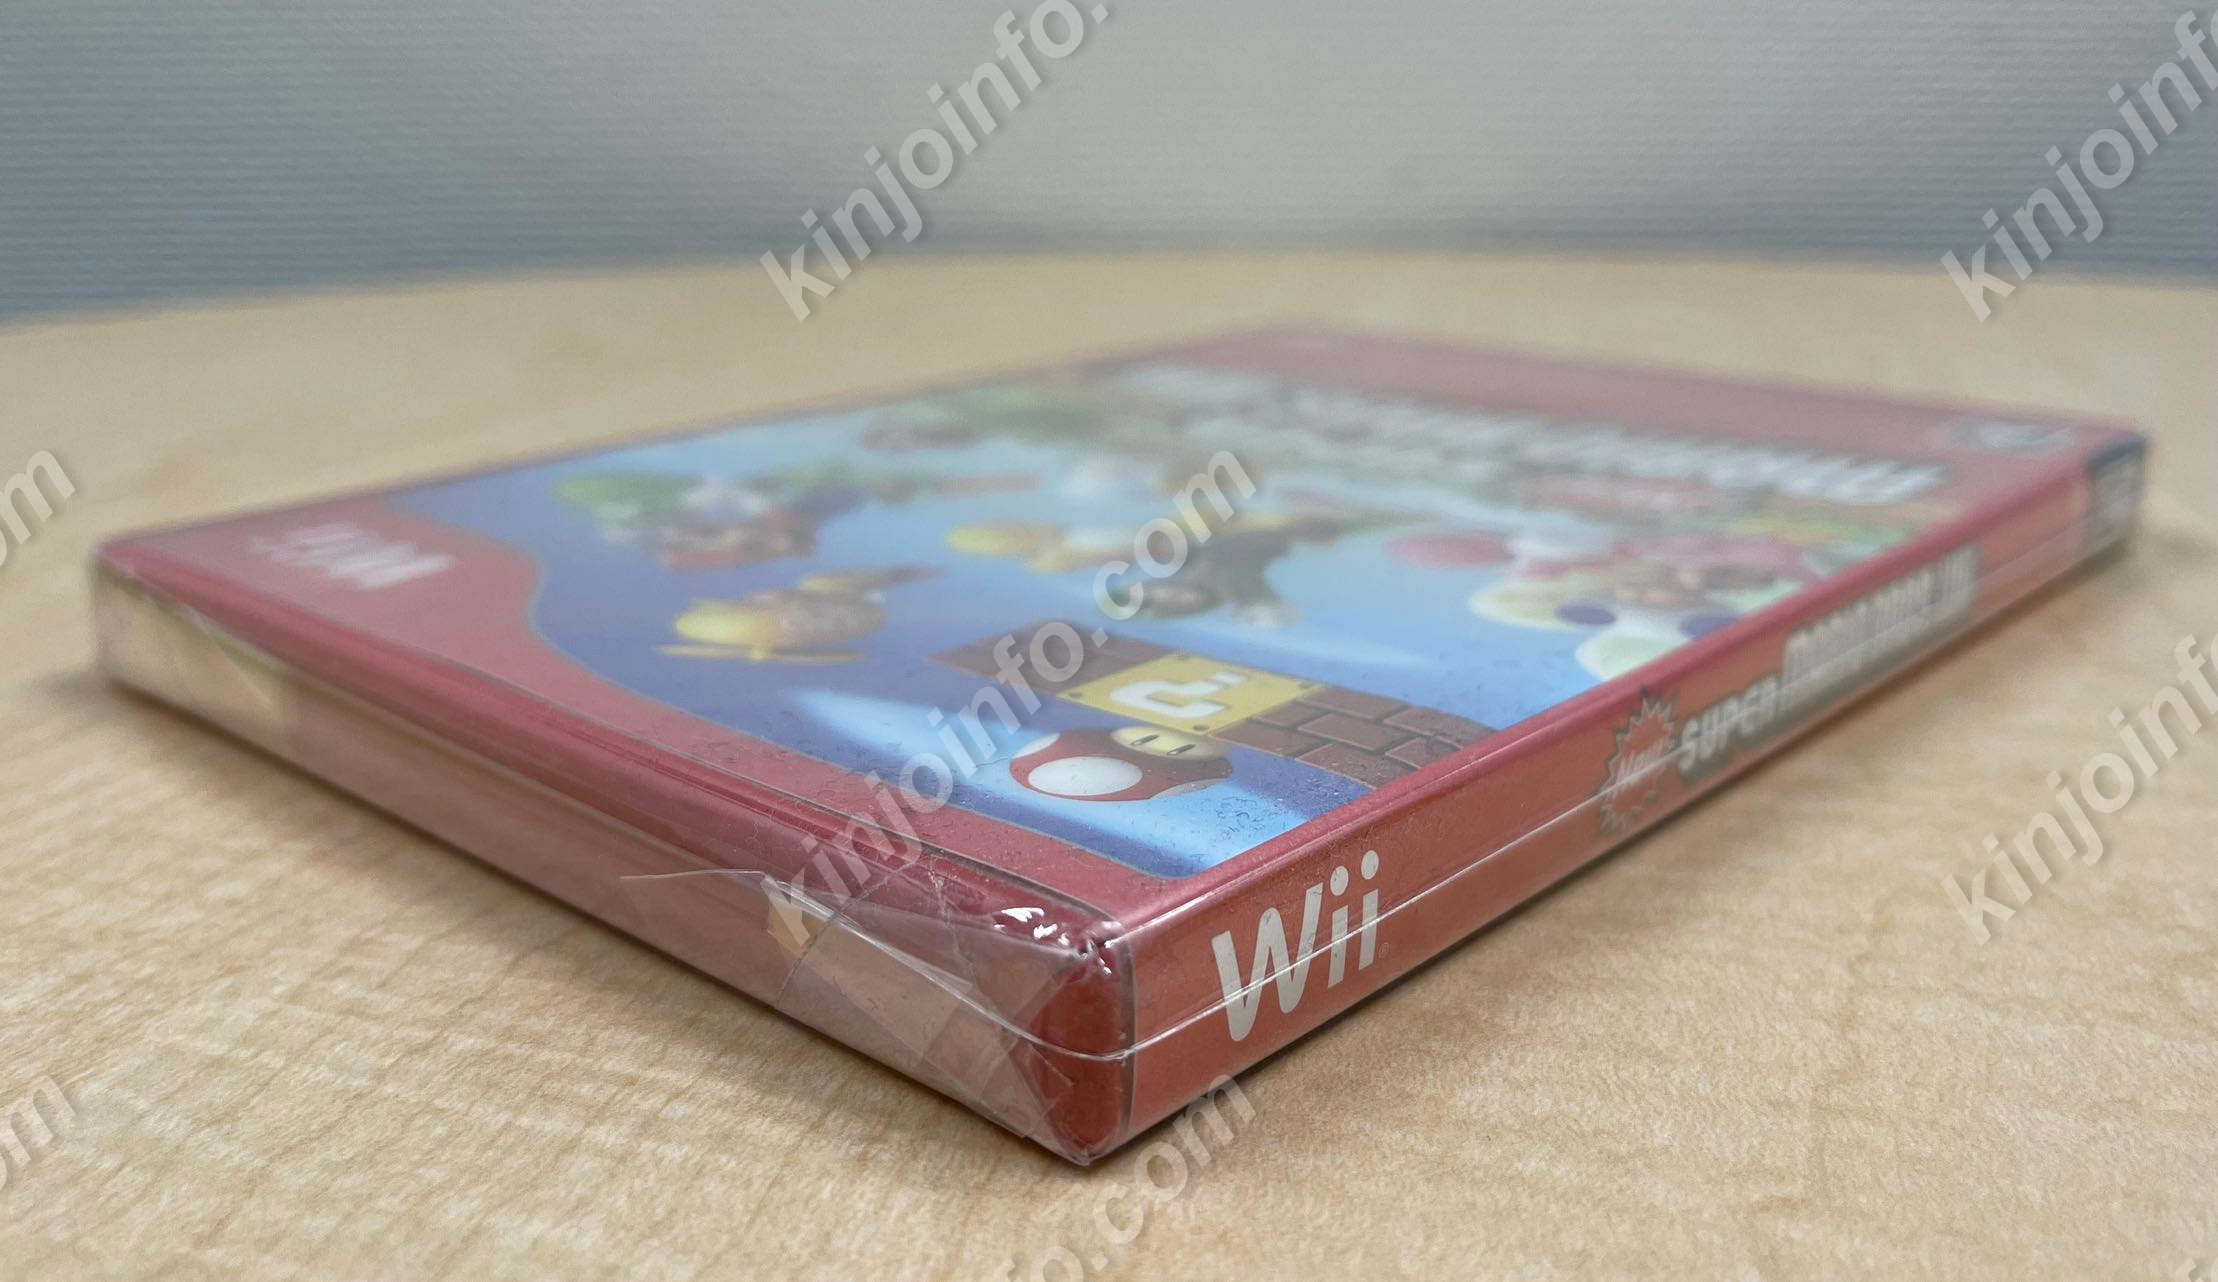 New スーパーマリオブラザーズ Wii【新品未開封・Wii日本版】 / kinjoinfo